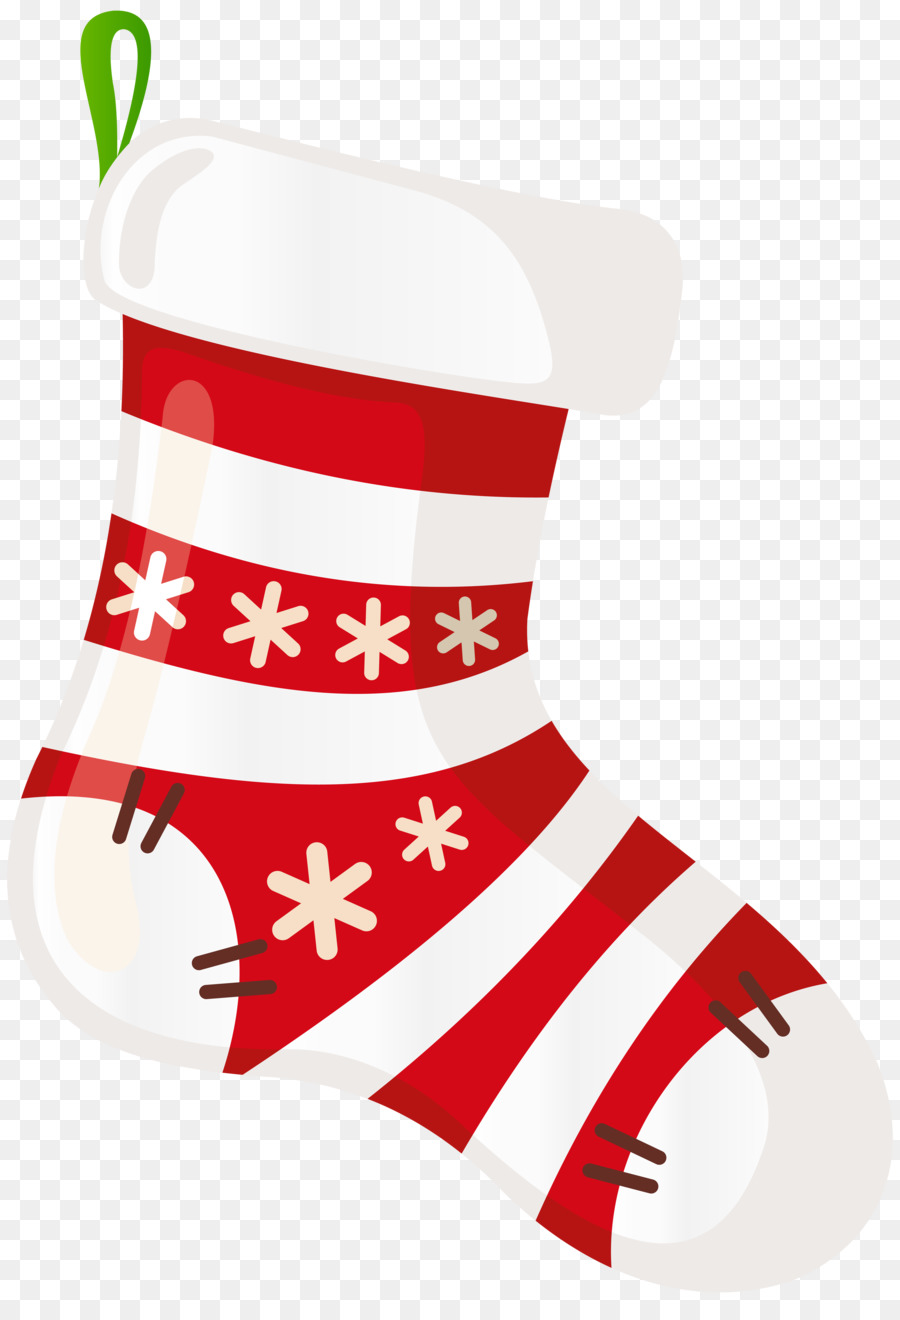 Christmas Stockings Santa Claus Gift Clip art - christmas stockings png download - 5526*8000 - Free Transparent Christmas Stockings png Download.